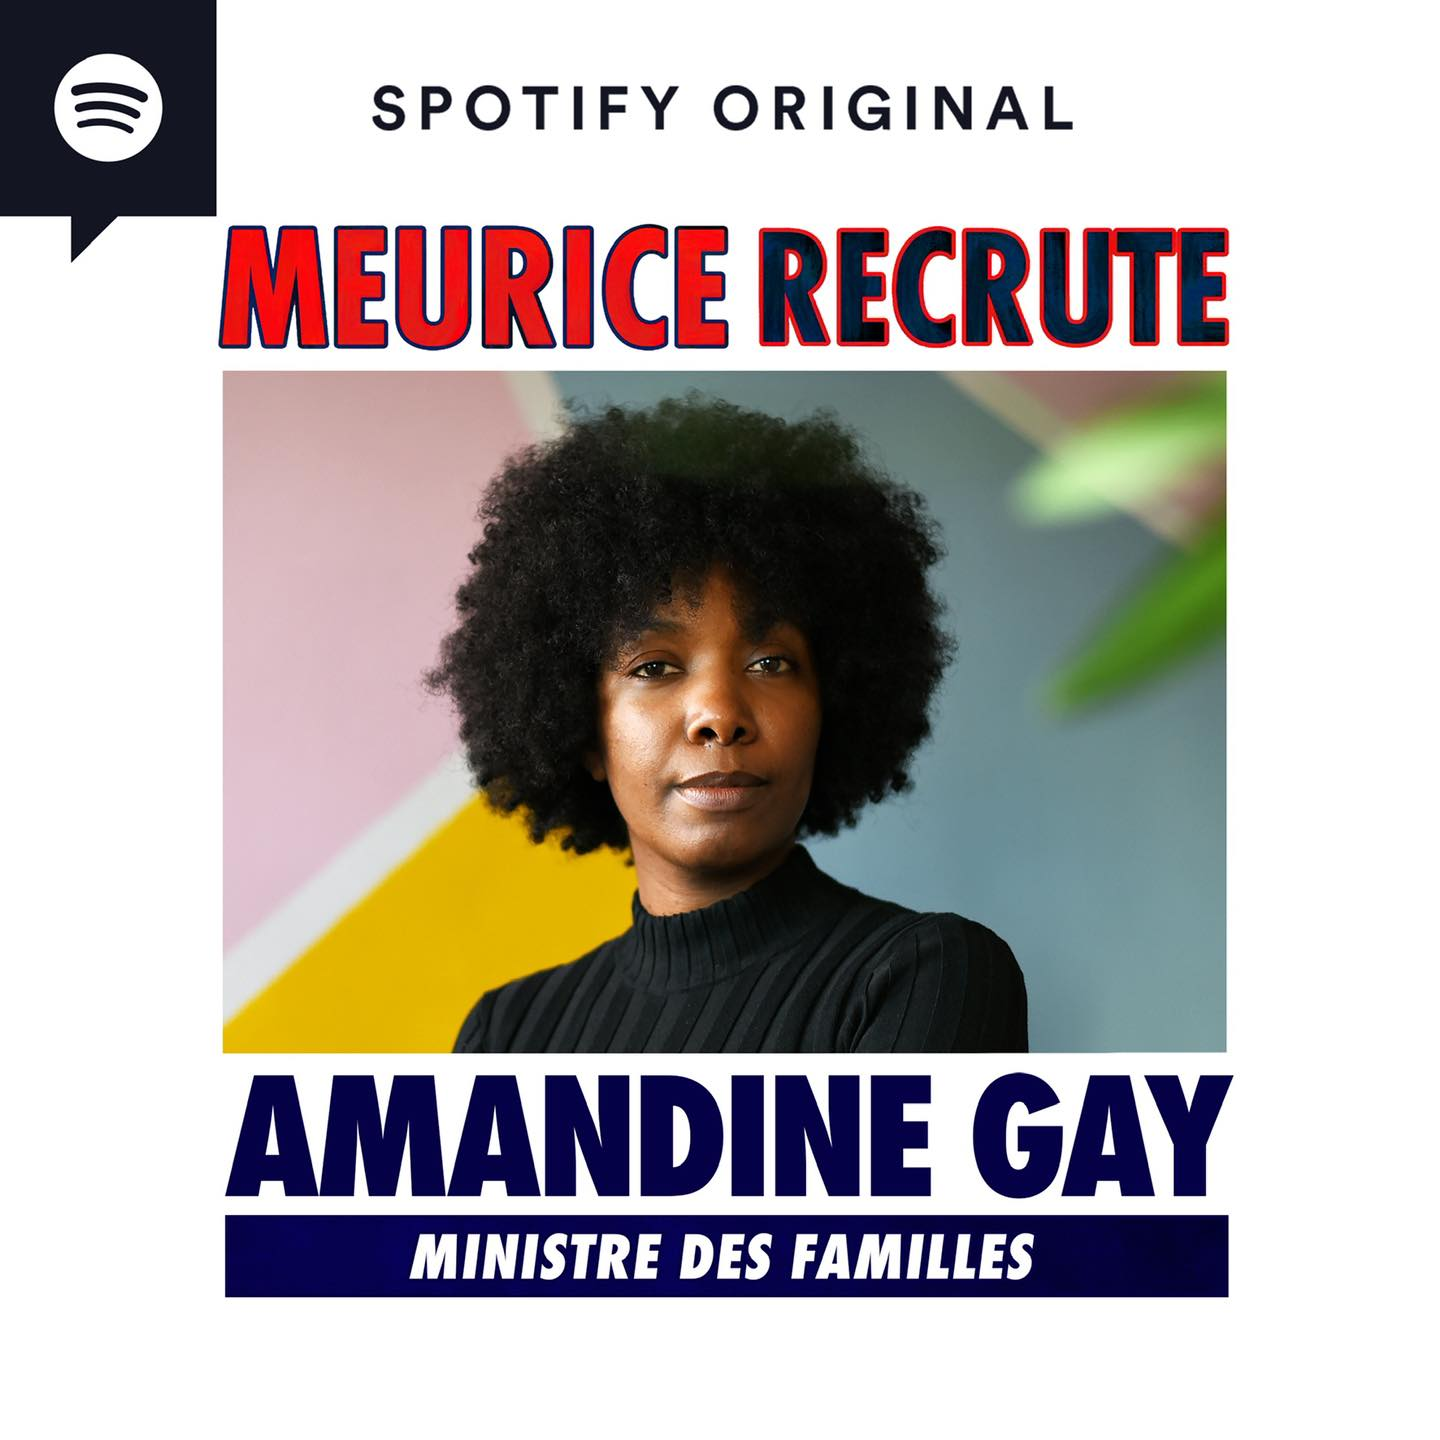 « Amandine Gay, ministre des familles » #meuricerecrute